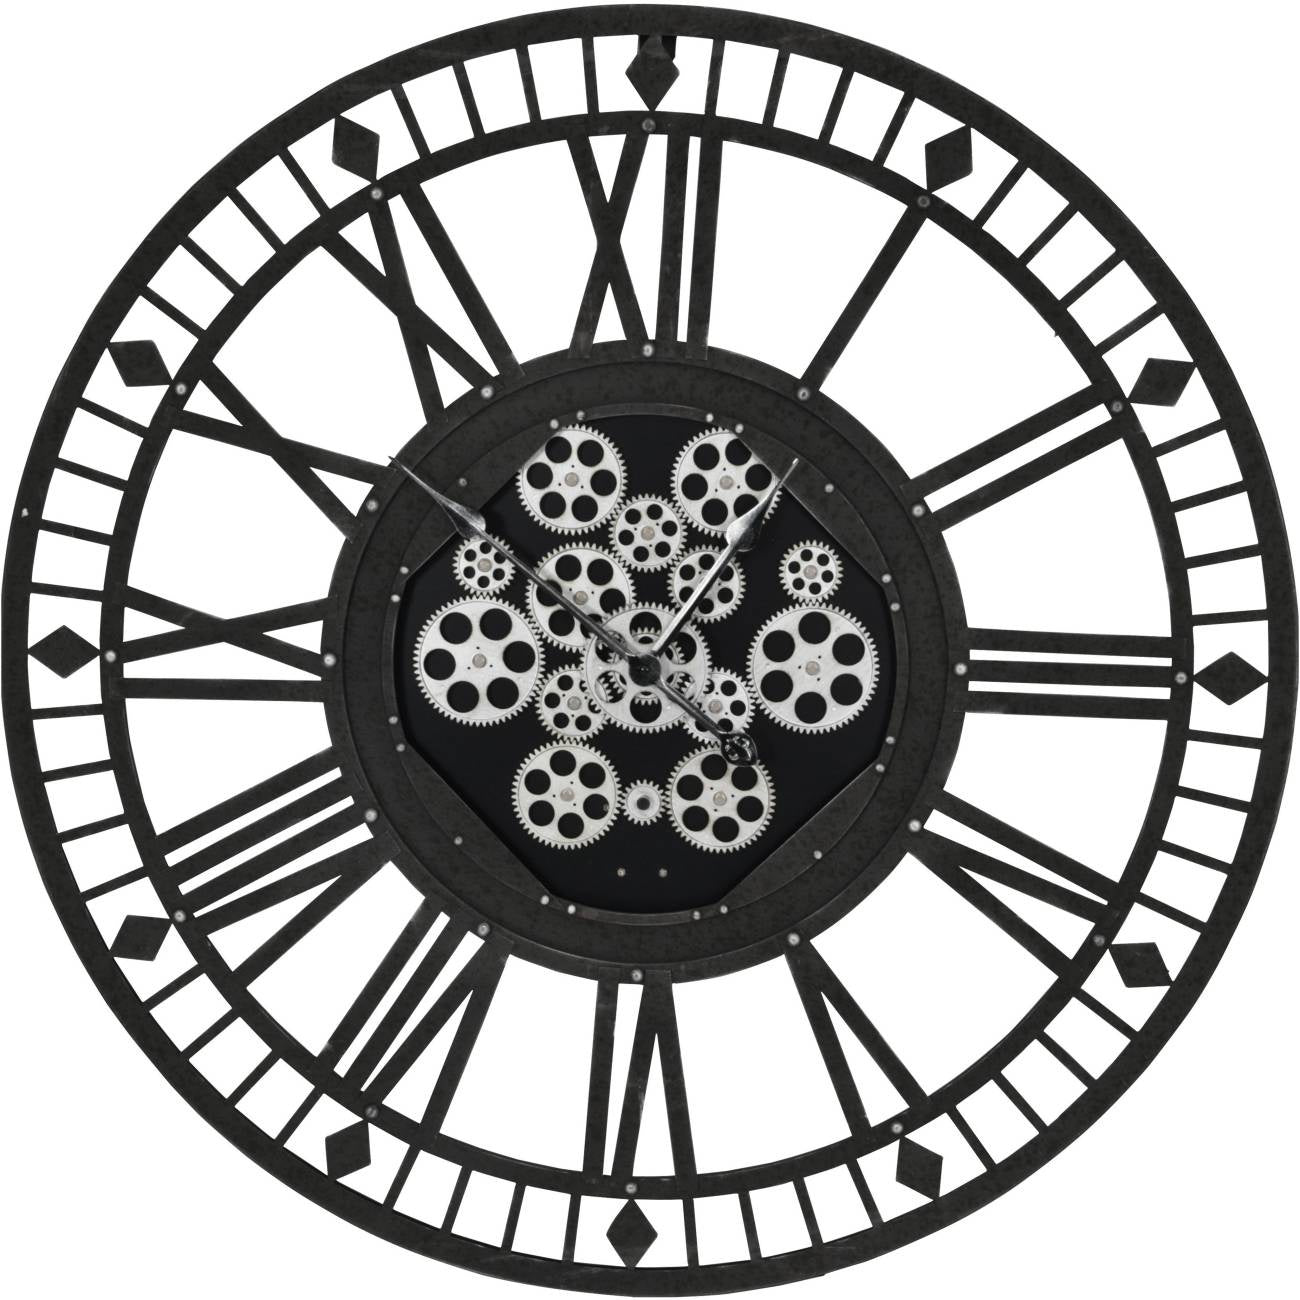 Gibbons grey skeleton moving cog clock - Pavilion Interiors